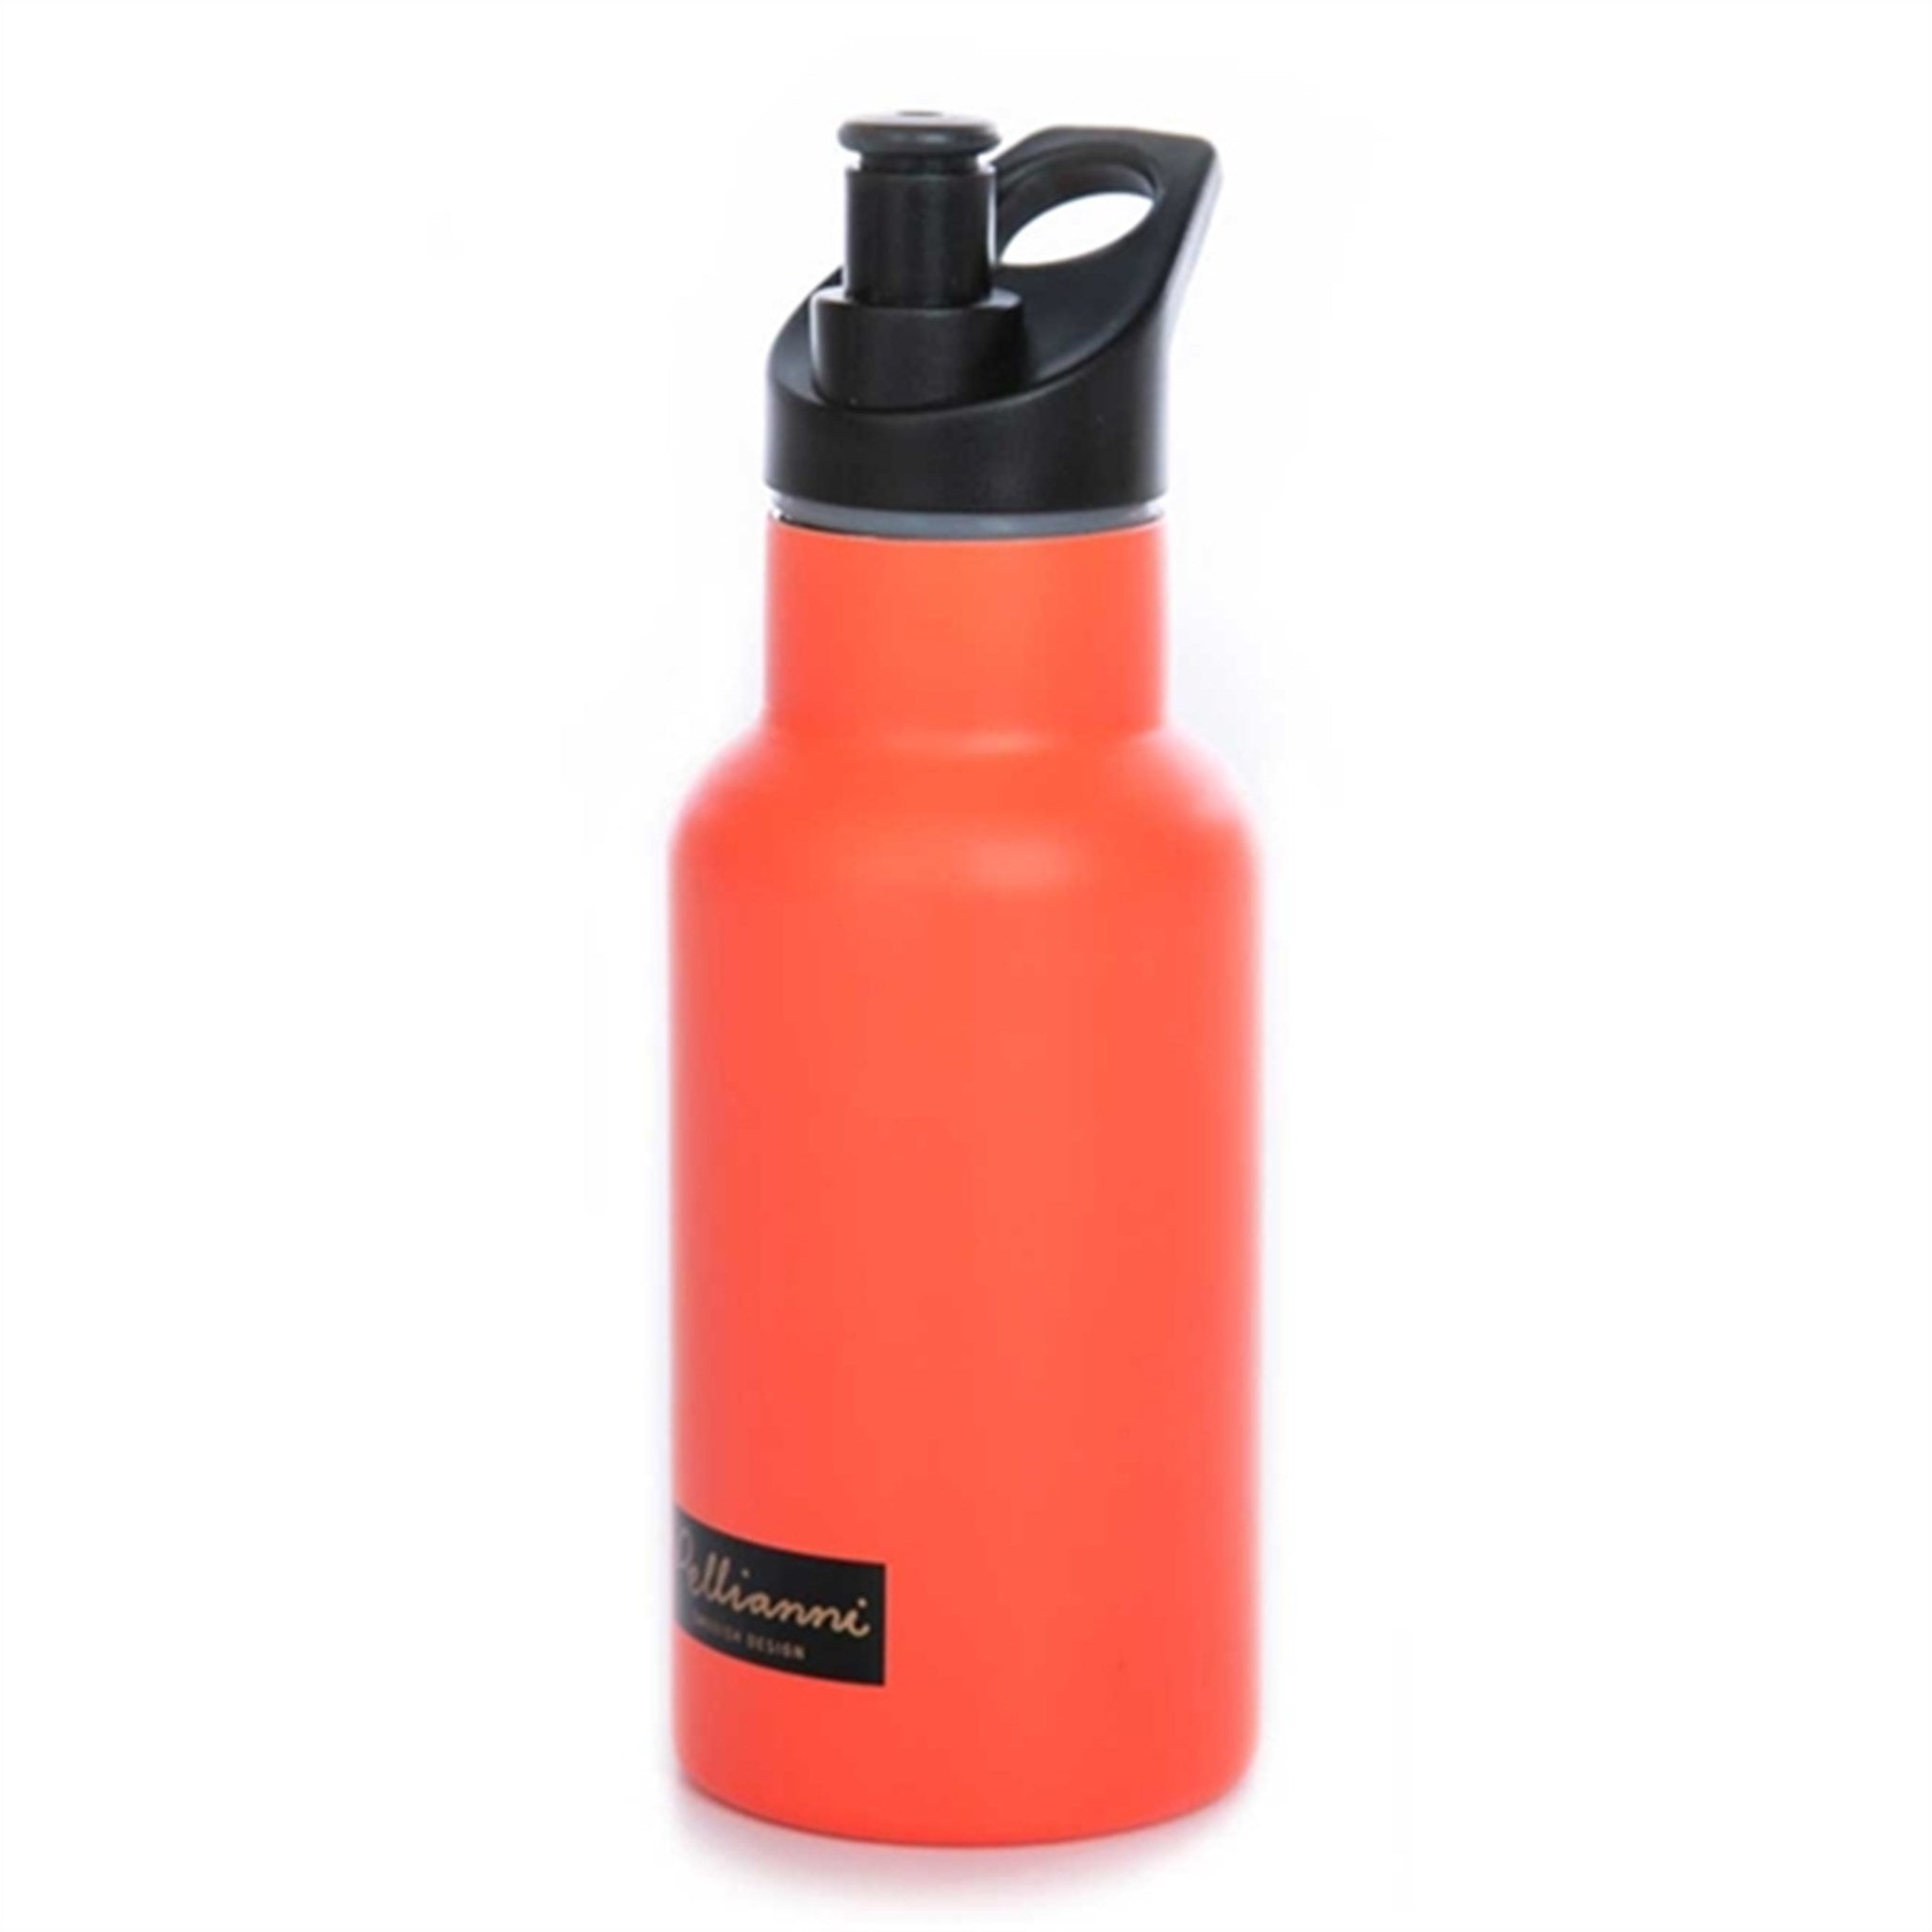 Pellianni Stainless Steel Bottle 350ml Orange